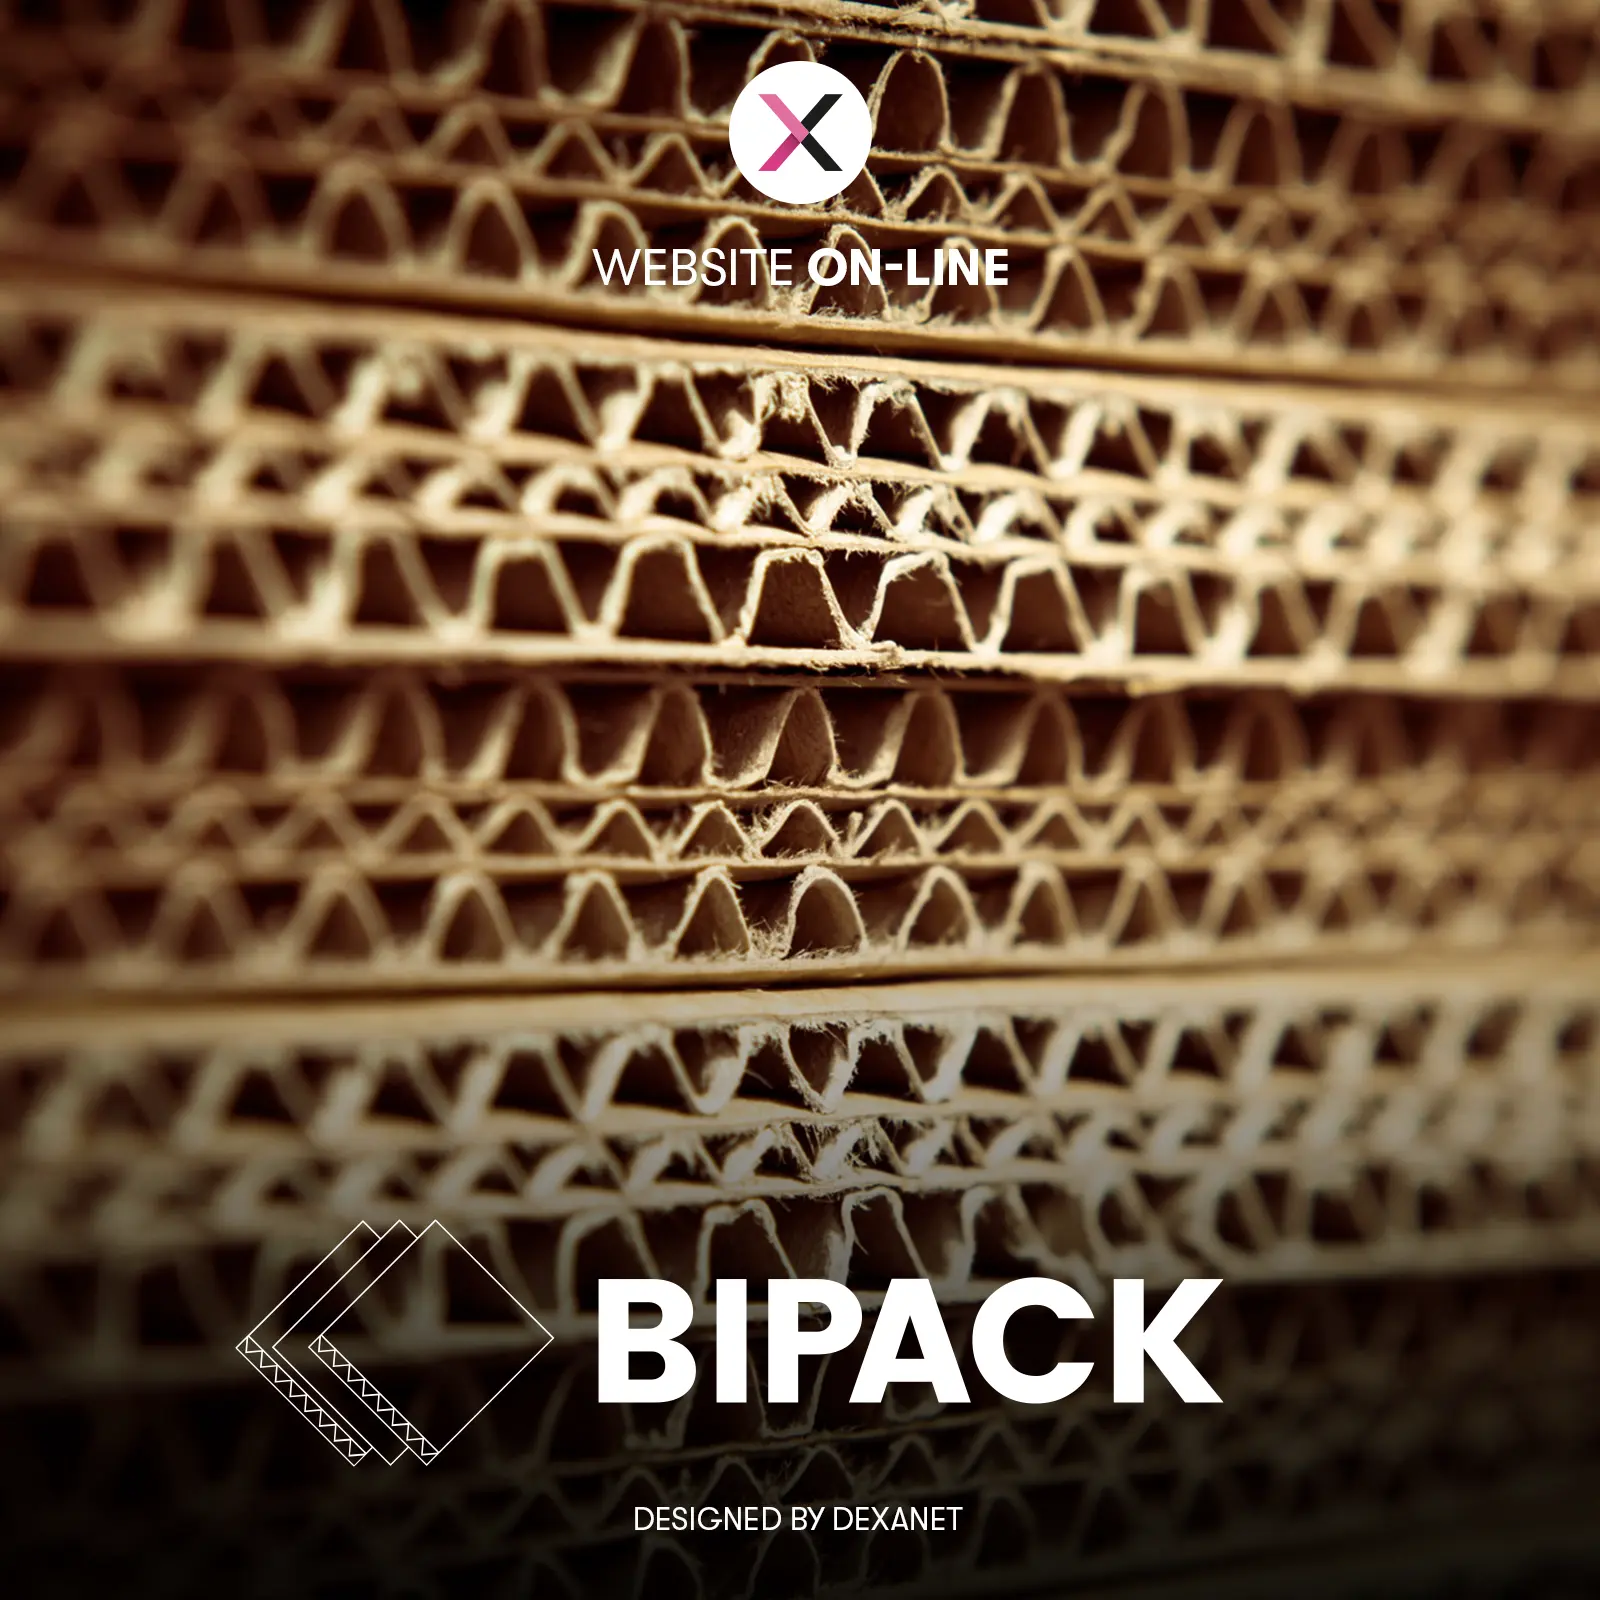 Bipack: mille scatole, zero rotture.